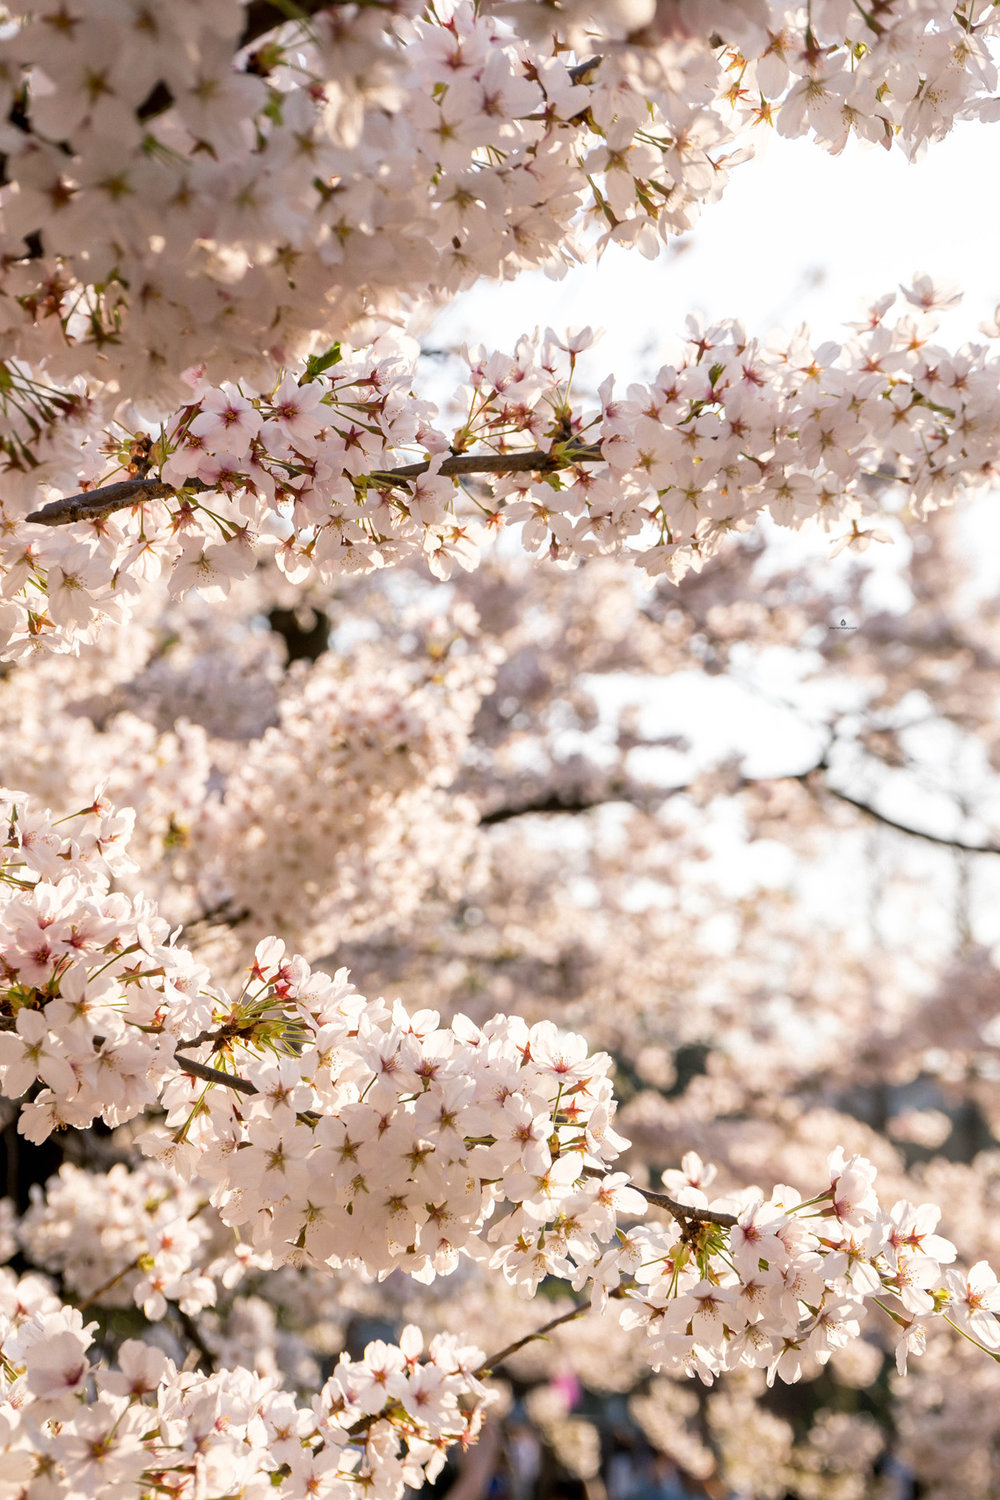 Cherry blossoms in Tsurumai park, Nagoya